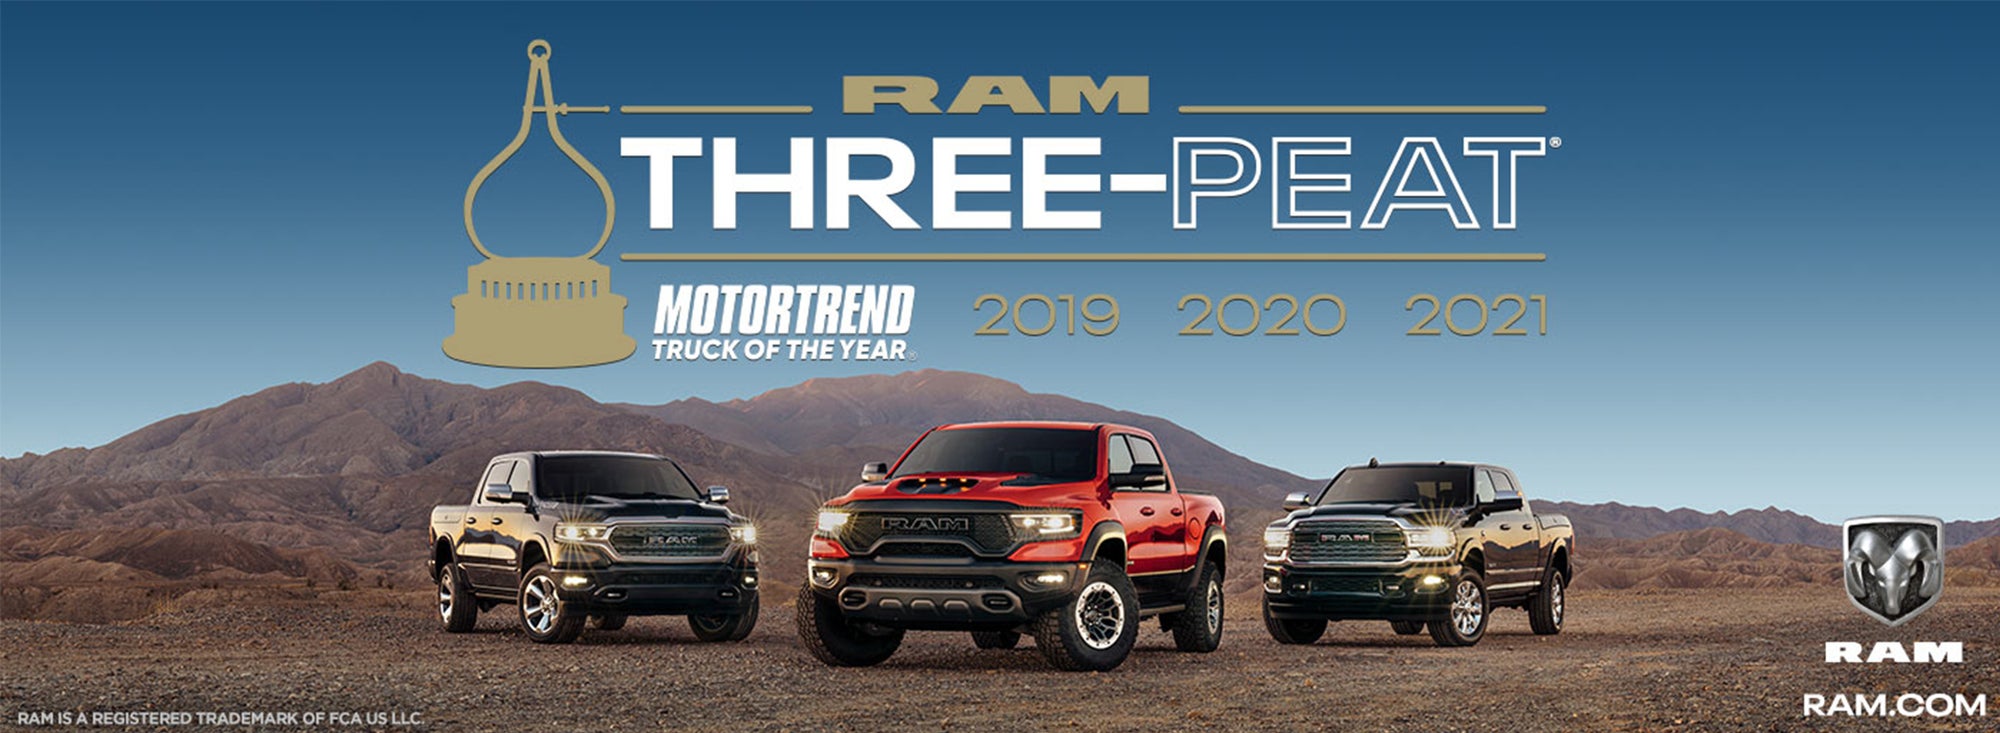 Three-Peat Motor Trend Awards